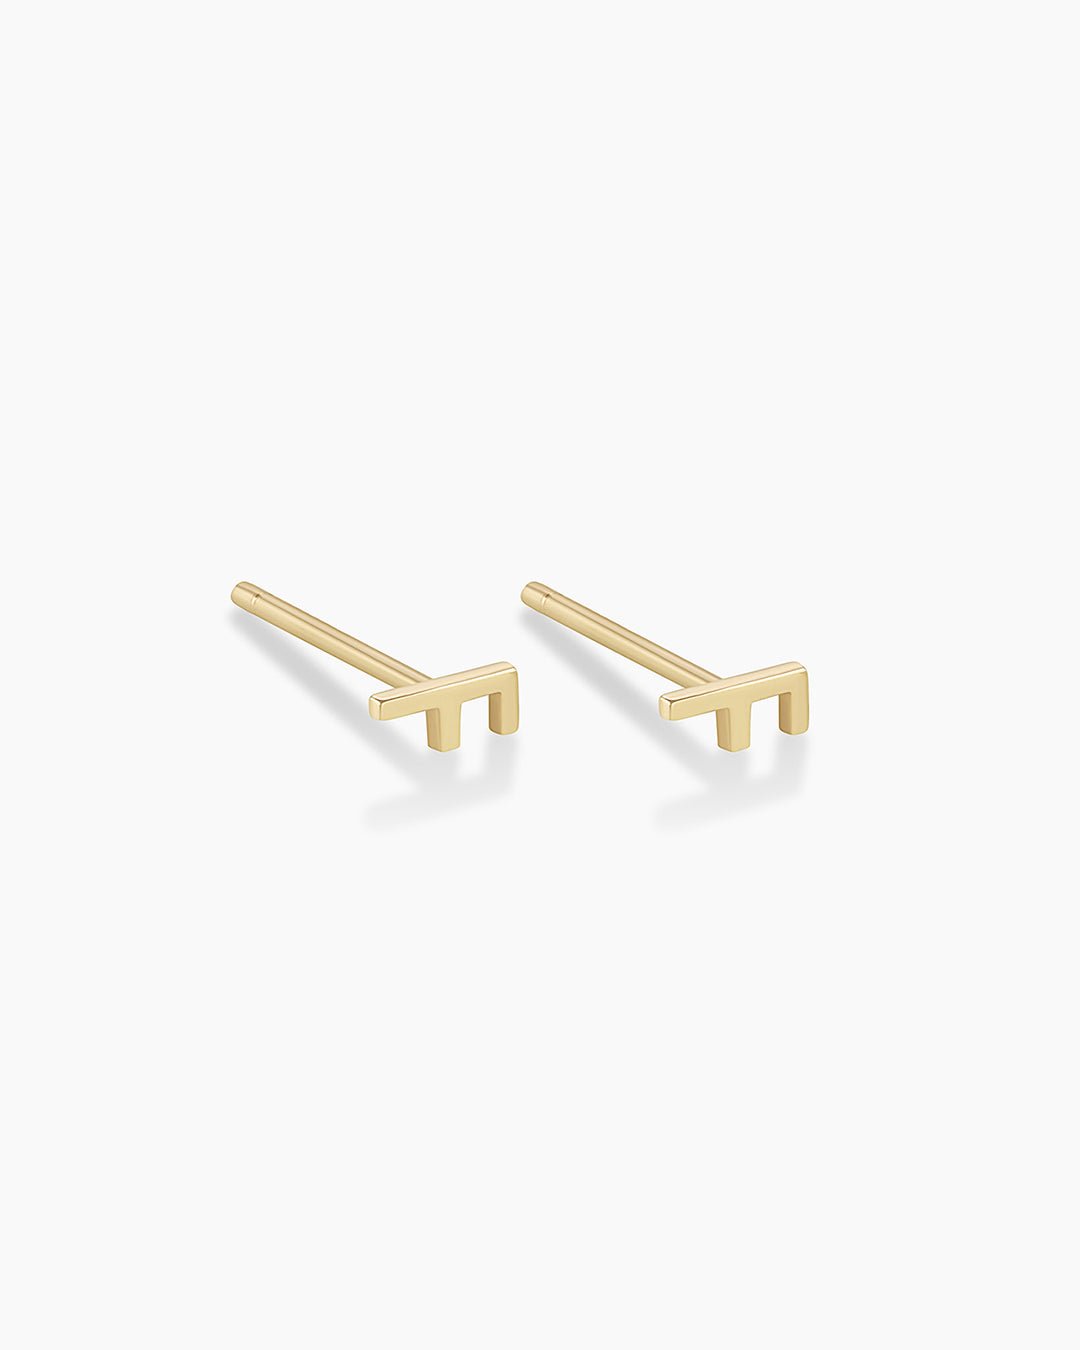 Alphabet earring stud || option::14k Solid Gold, F, Pair